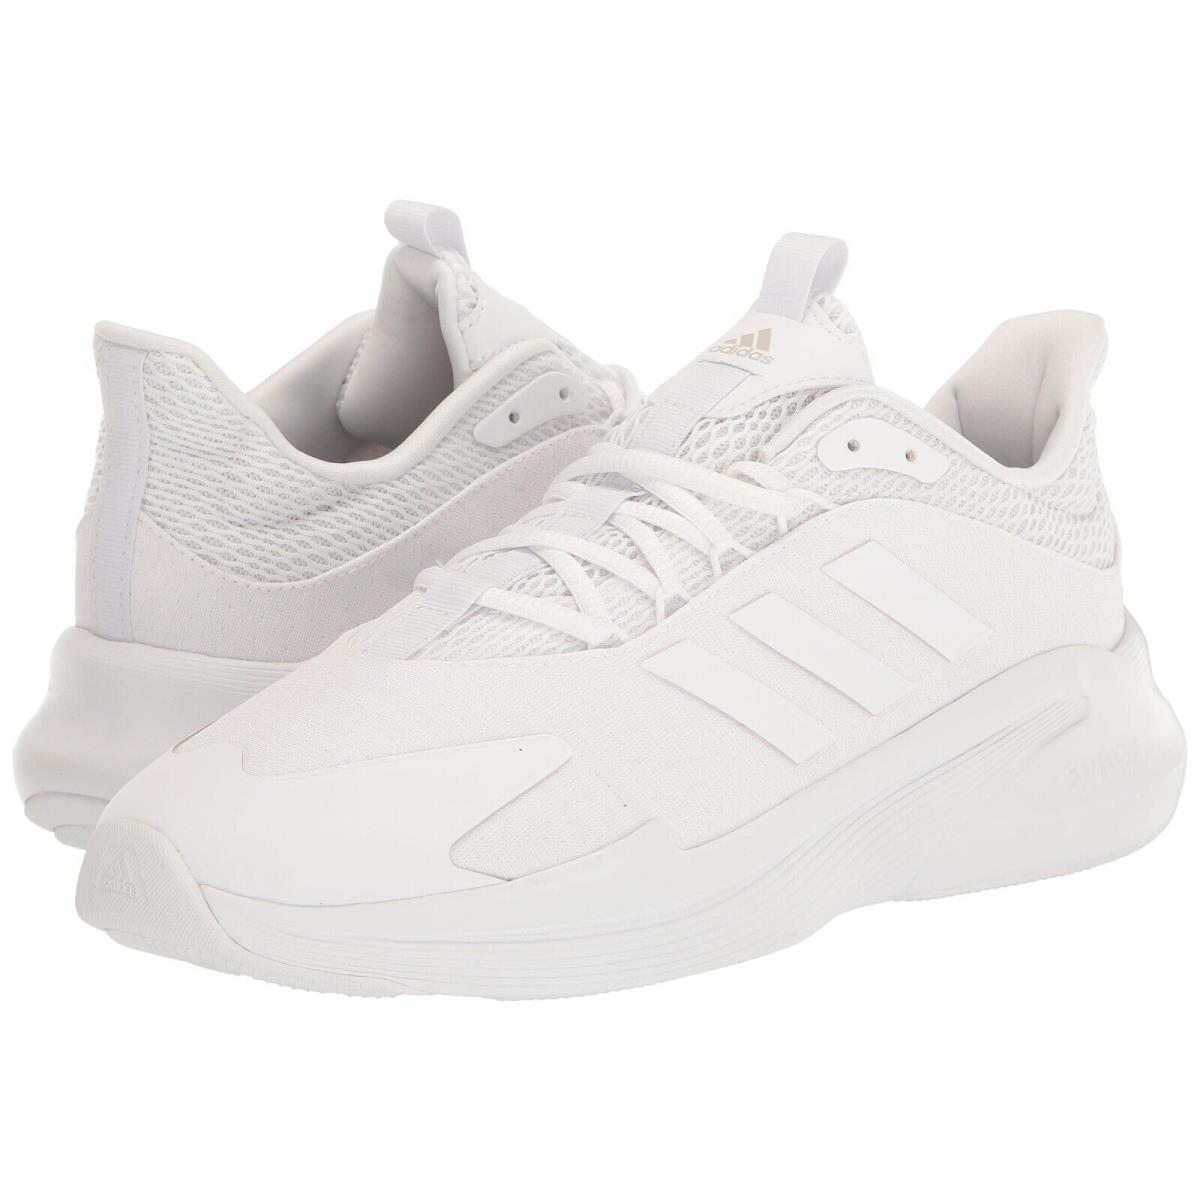 Adidas Mens Alphaedge Fashion Running Shoes White 11 - White